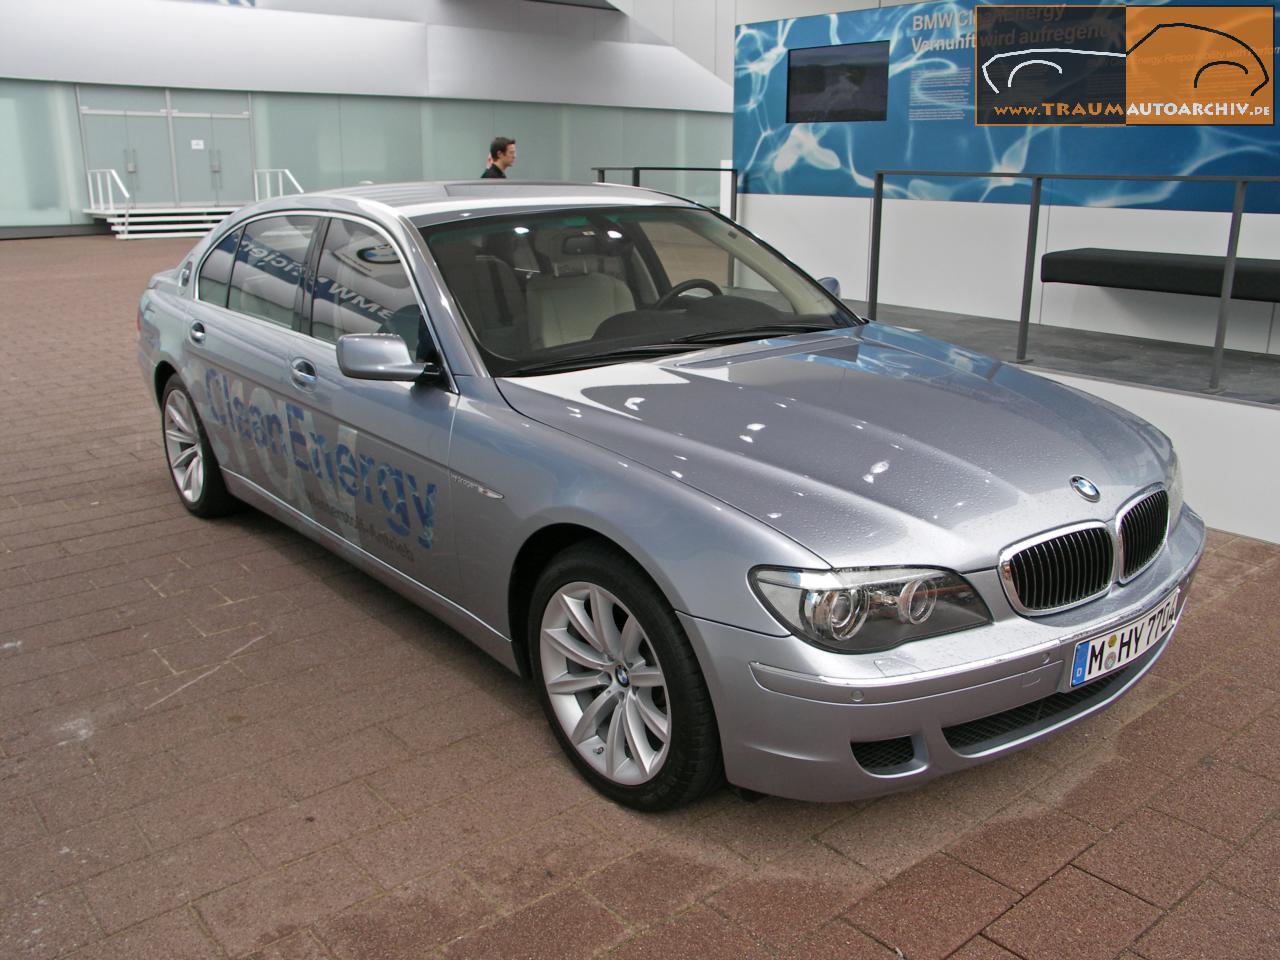 BMW Hydrogen 7 '2007.jpg 160.8K